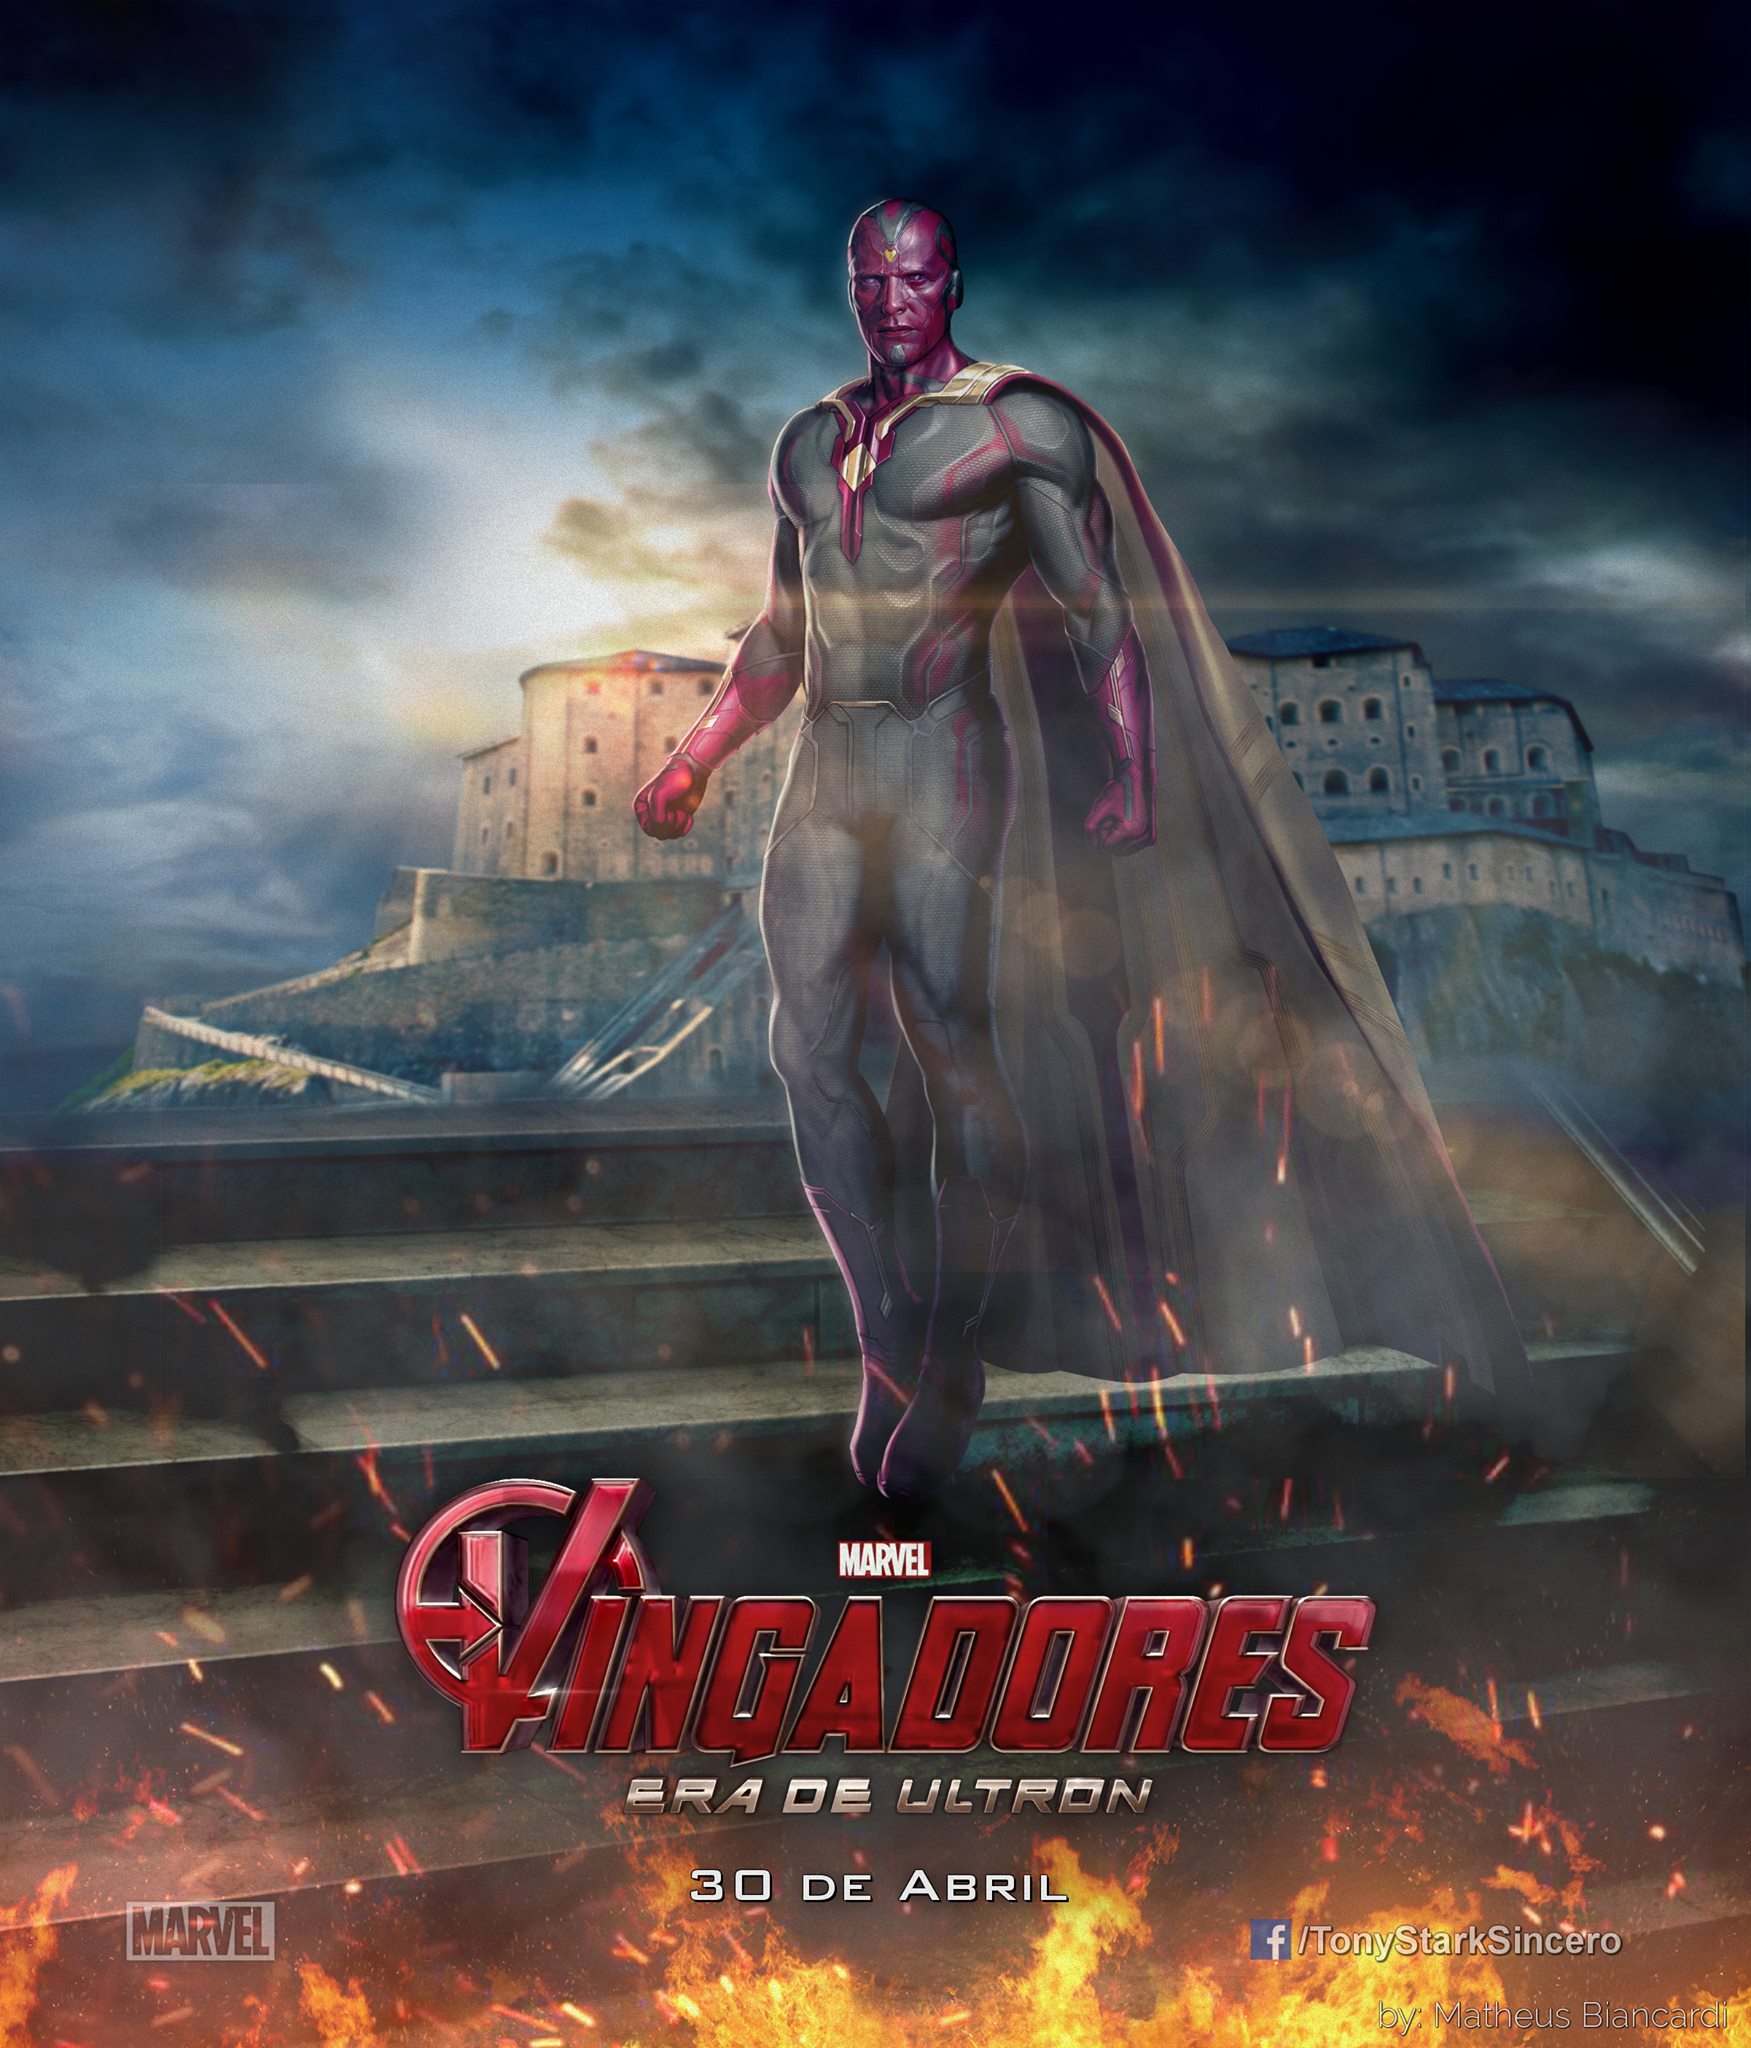 Avengers: Age of Ultron Promo Art